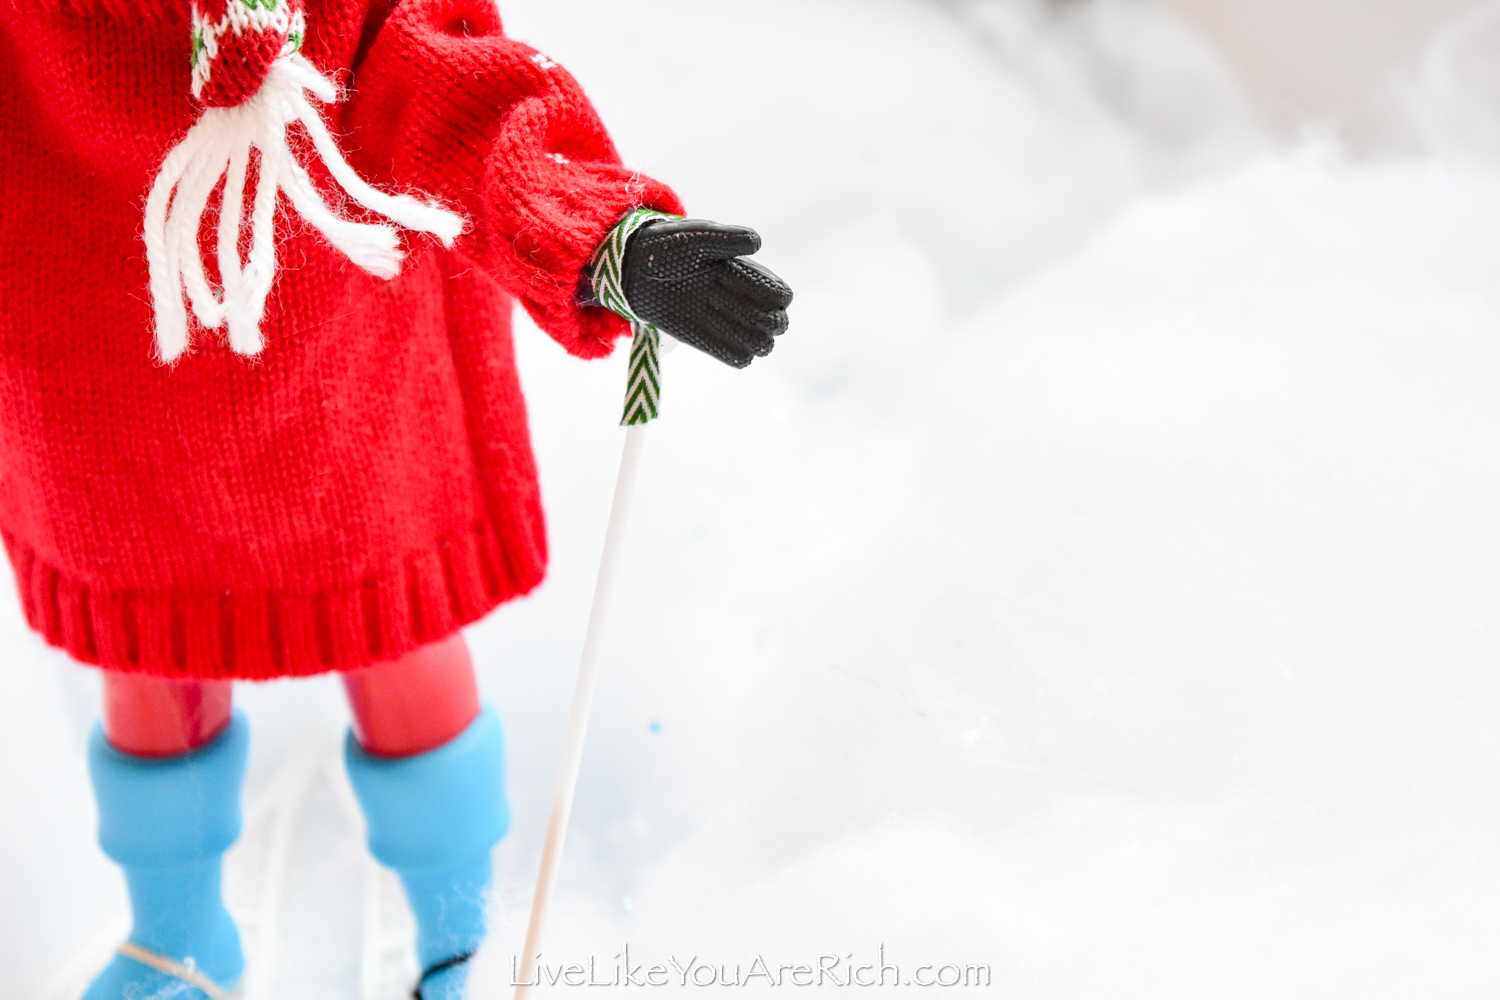 Elf on the Shelf: Snowshoeing